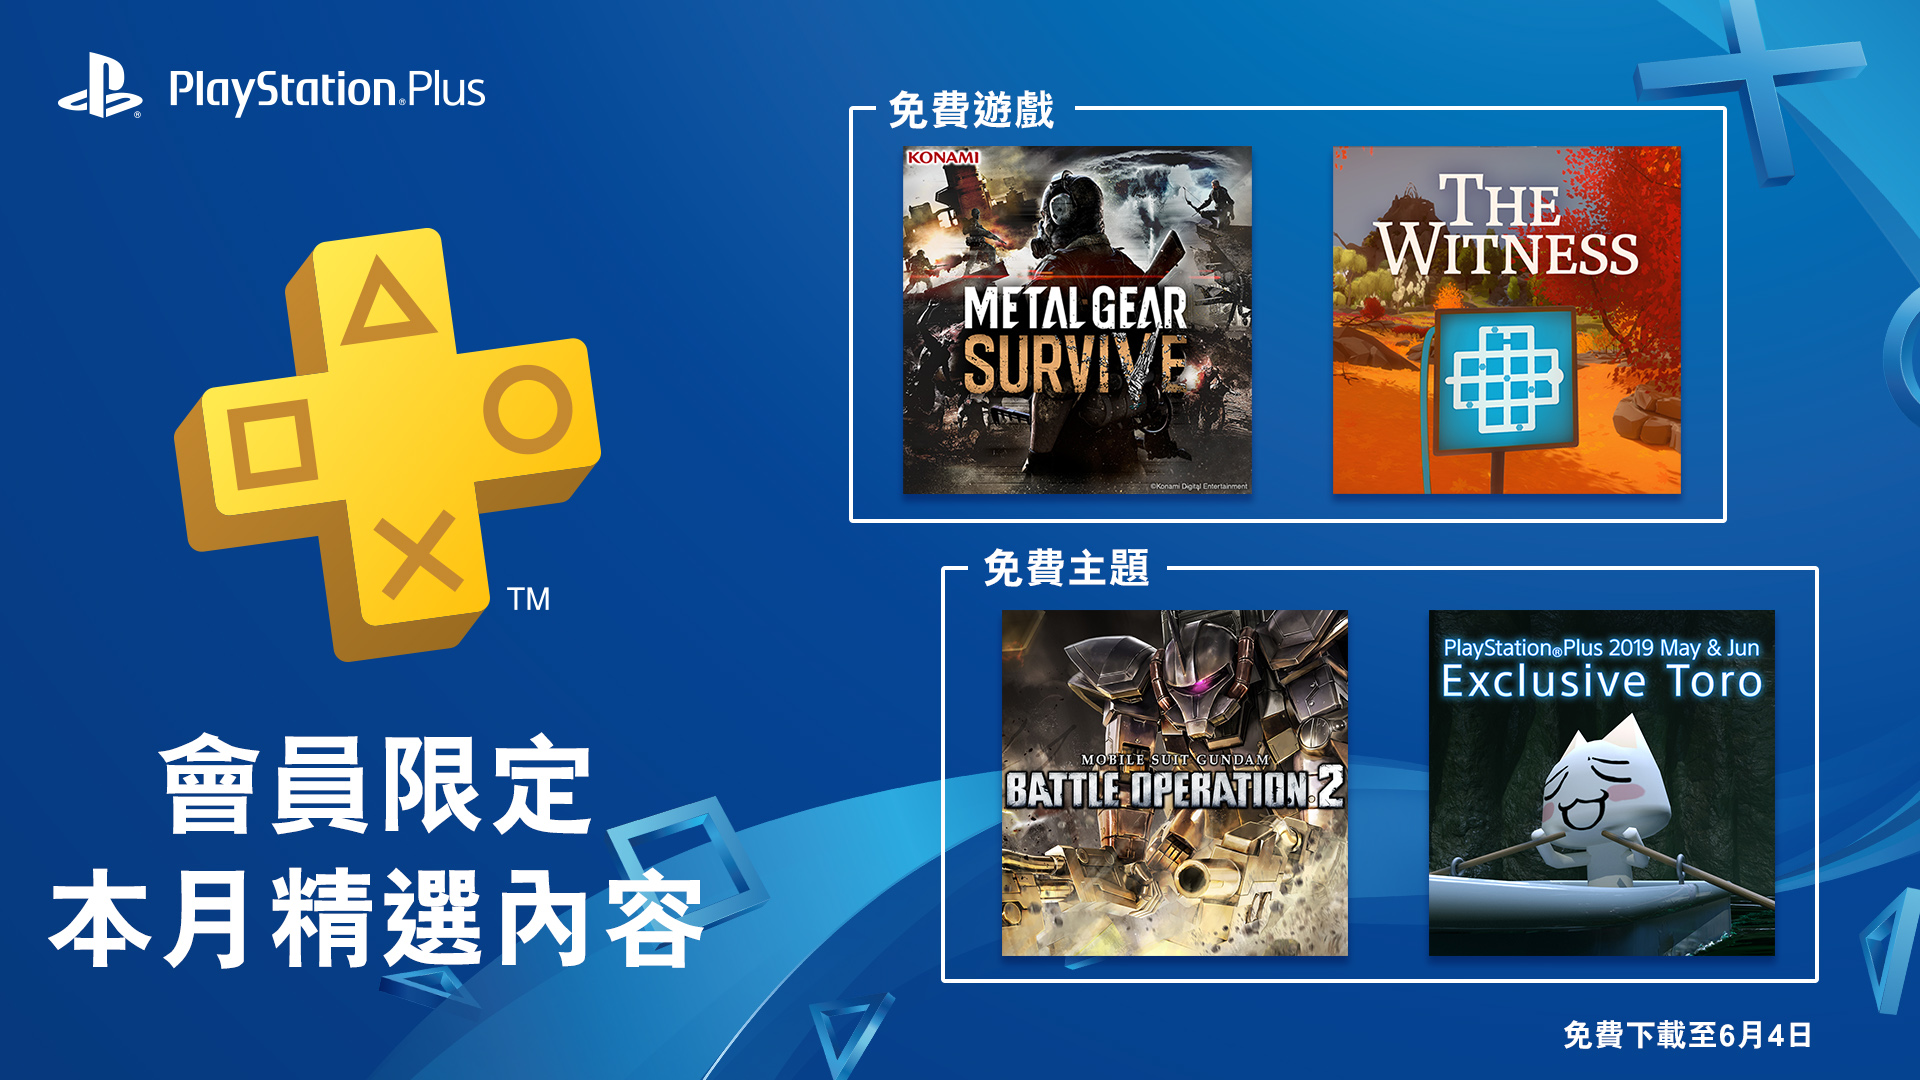  PlayStation Plus  2019 年 5 月份 免費遊戲公開 ：《潛龍諜影 求生戰》與《見證者》